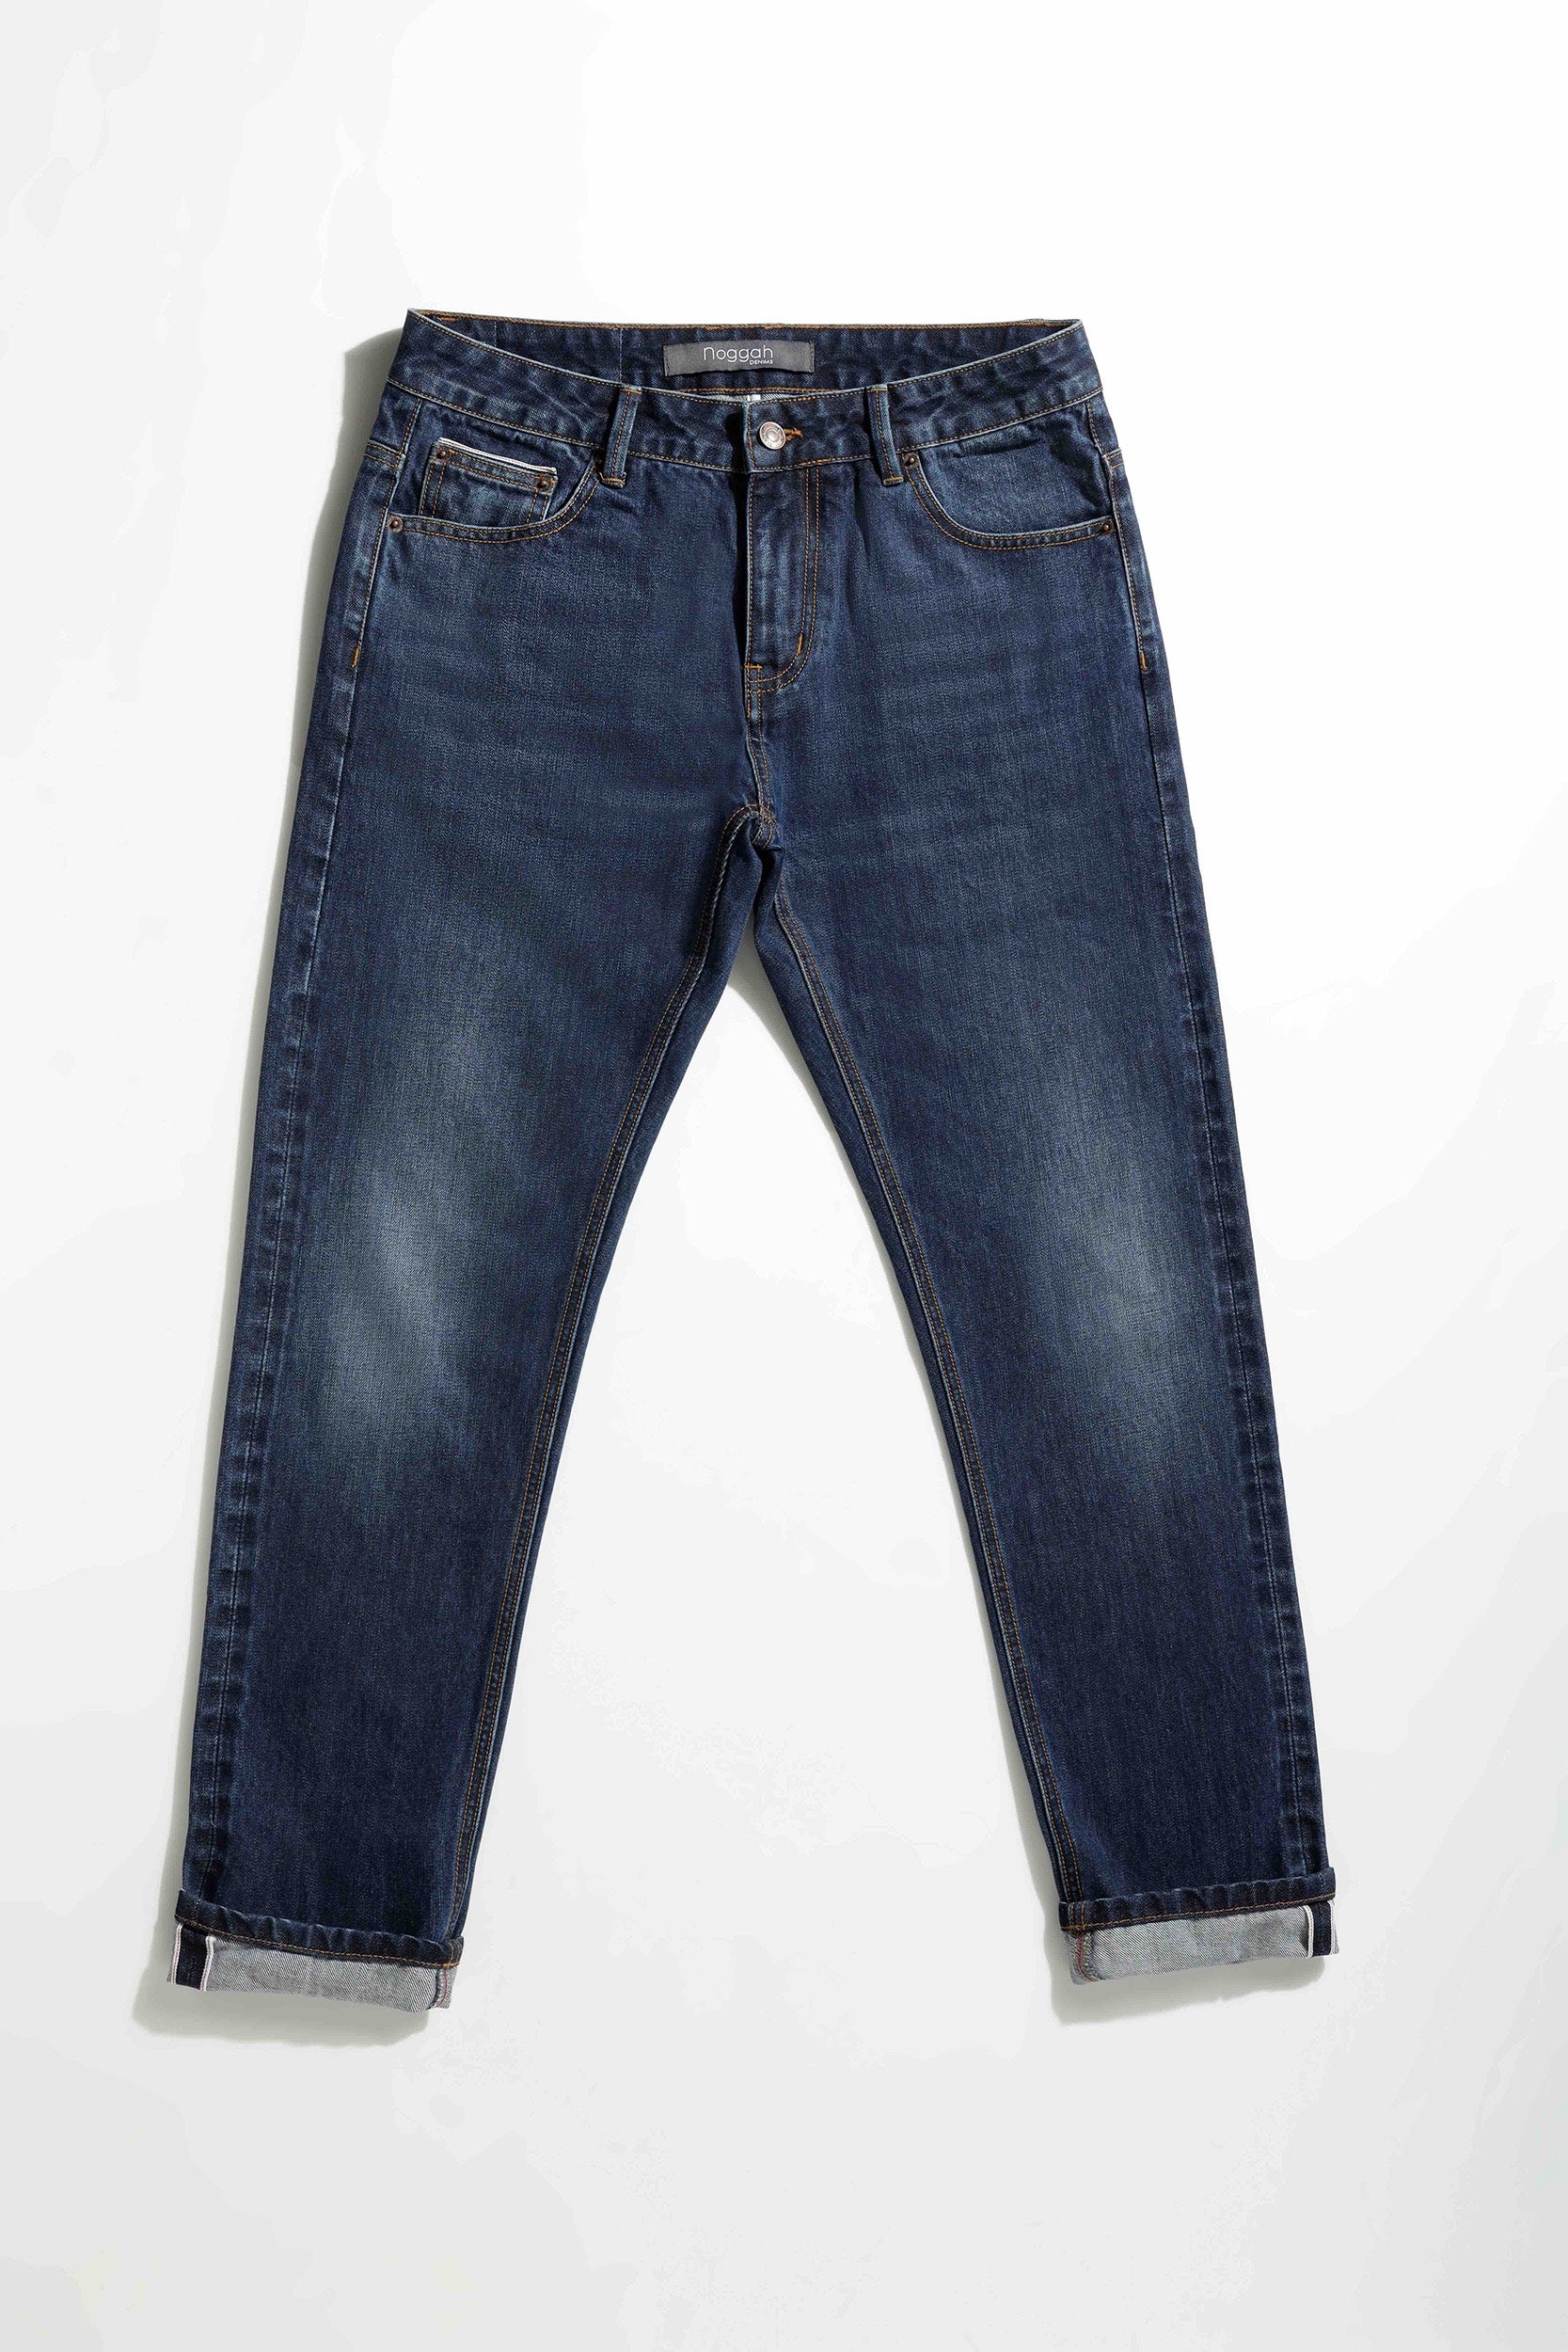 Cheese Denim Works 'SF-54XX' 16oz. Japanese Selvedge Jeans (Tight Cut)